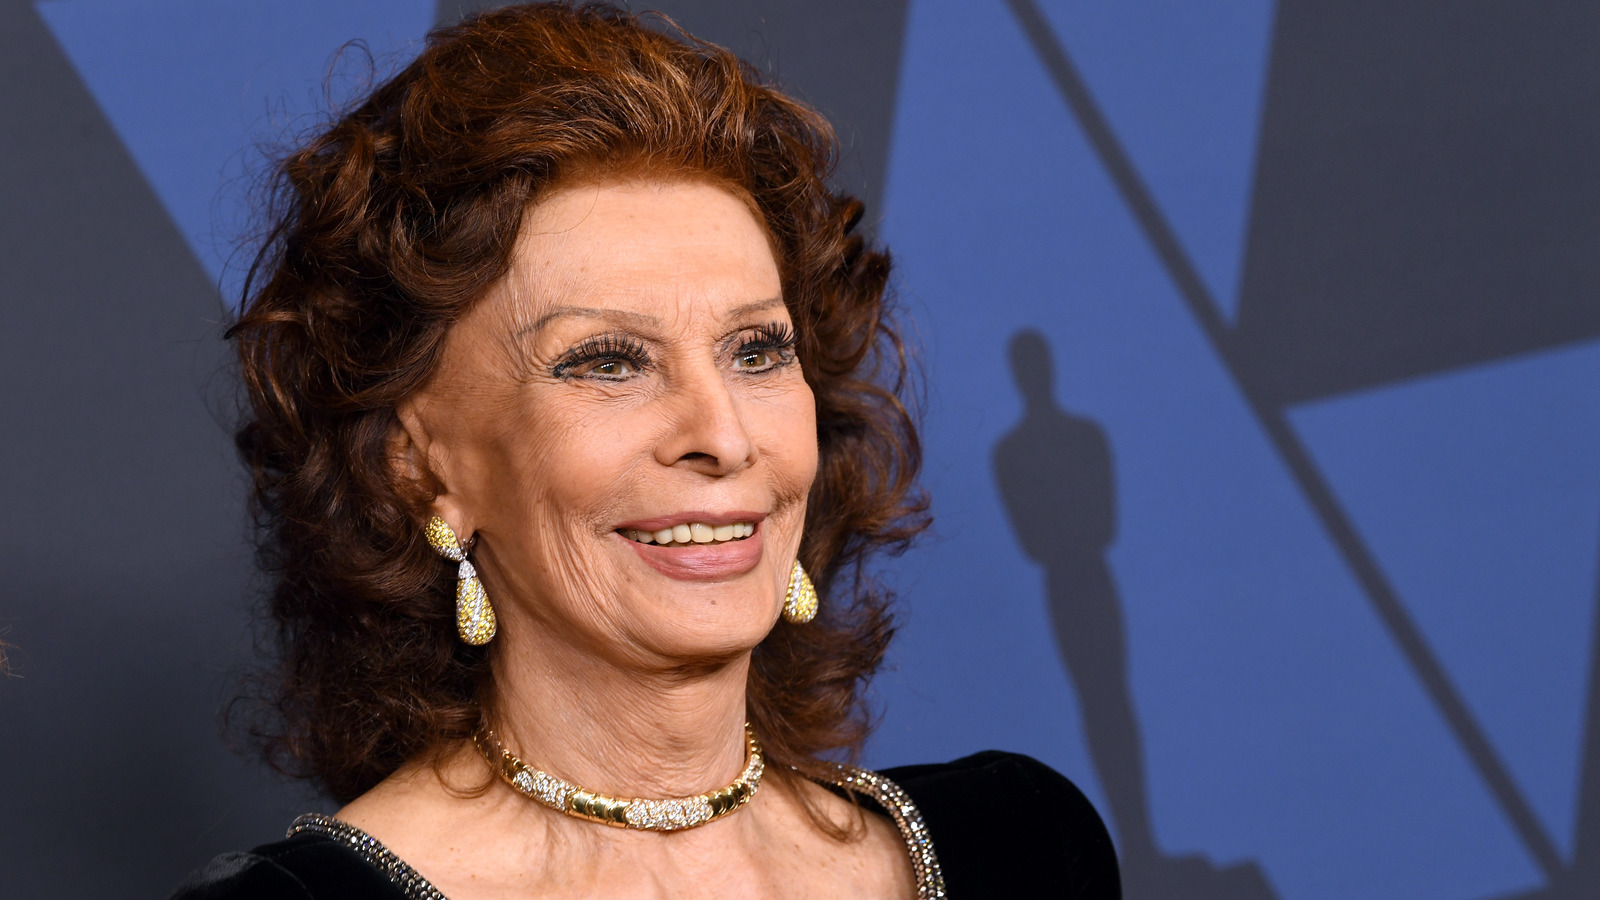 Sophia Loren reveals the secret to aging gracefully